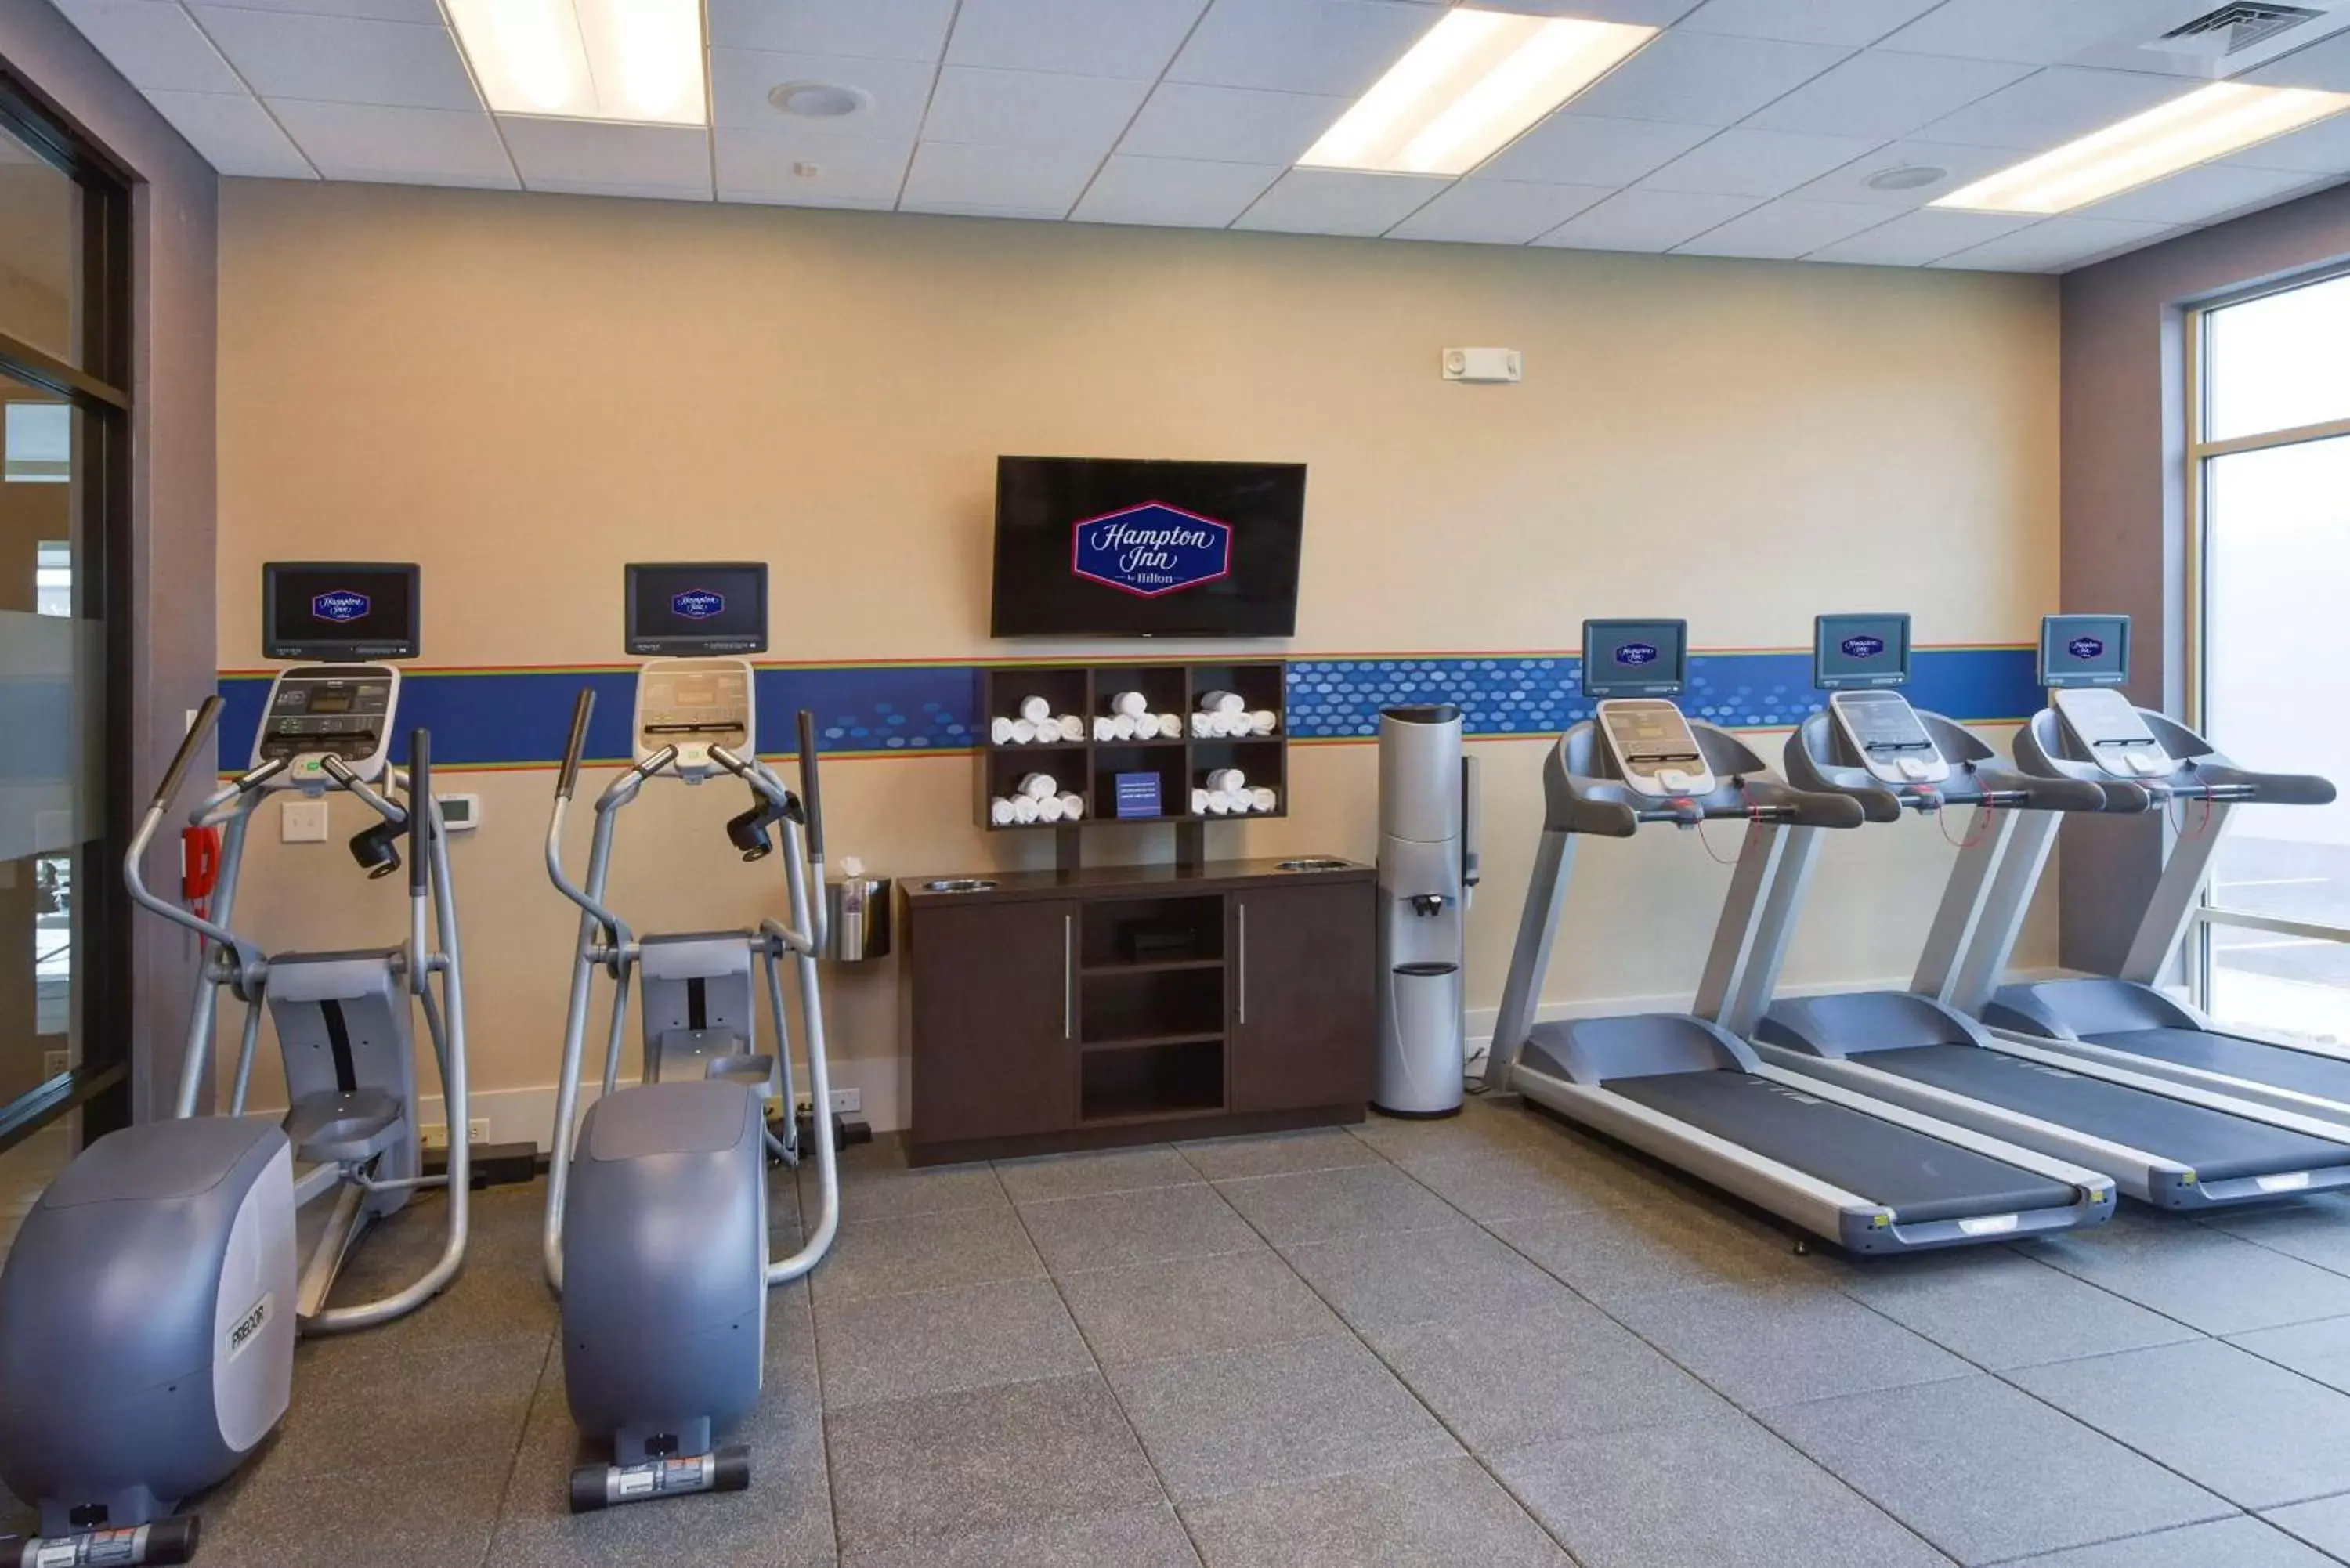 Fitness centre/facilities, Fitness Center/Facilities in Hampton Inn Lumberton, NC